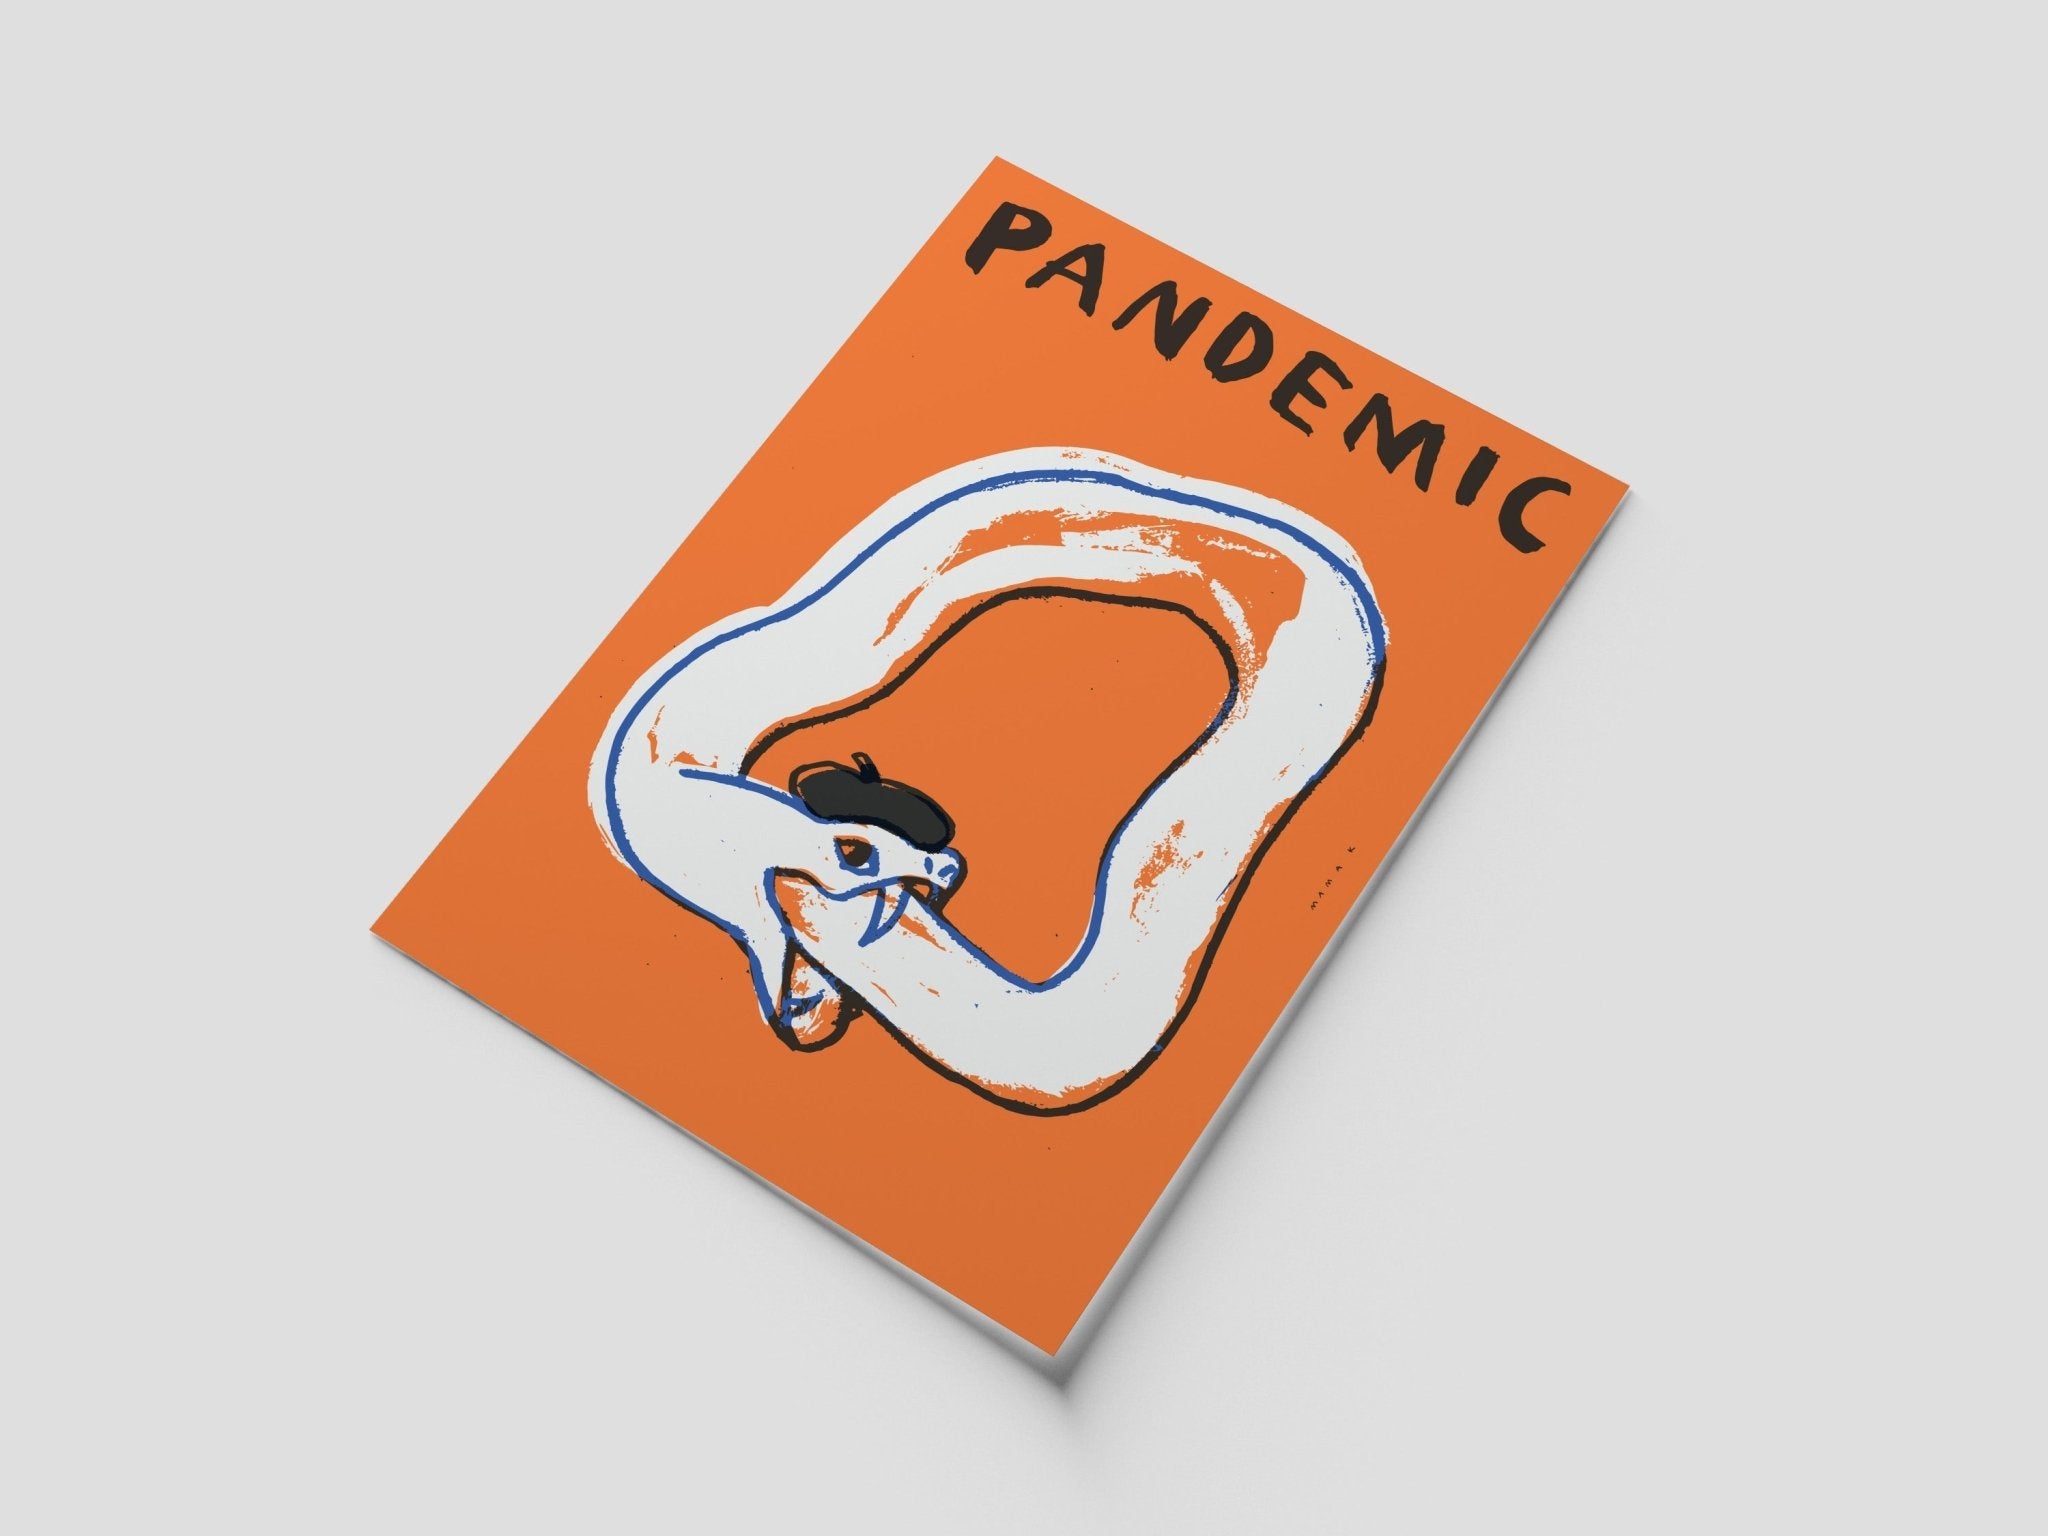 Art in Pandemic - Bartosz Mamak